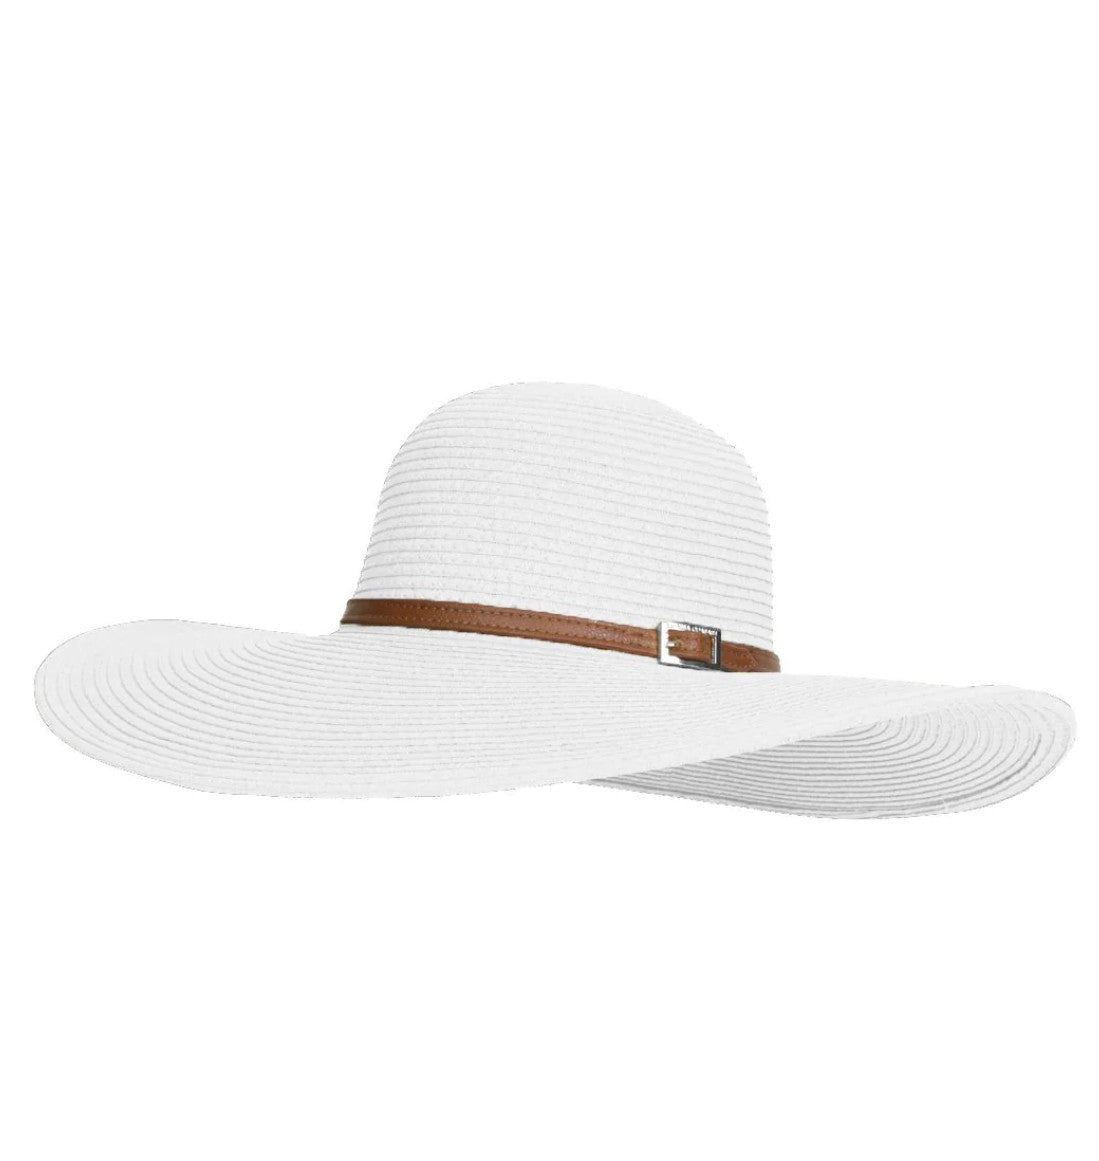 Jemima White Wide Brimmed Hat